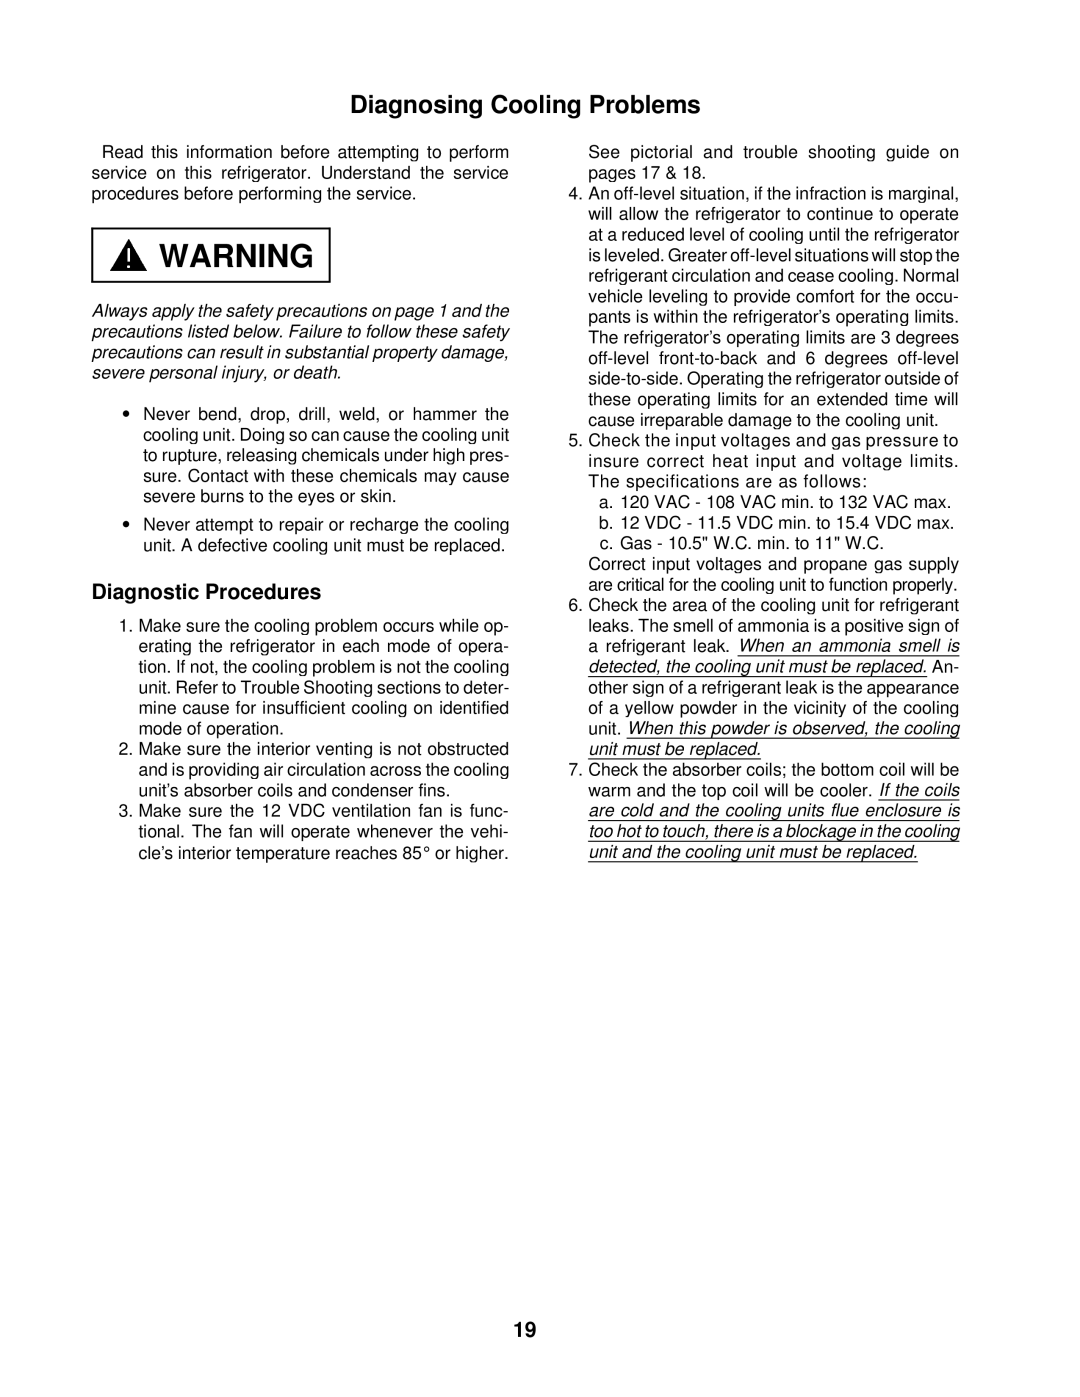 Bryant 3163 service manual Diagnosing Cooling Problems, Diagnostic Procedures 